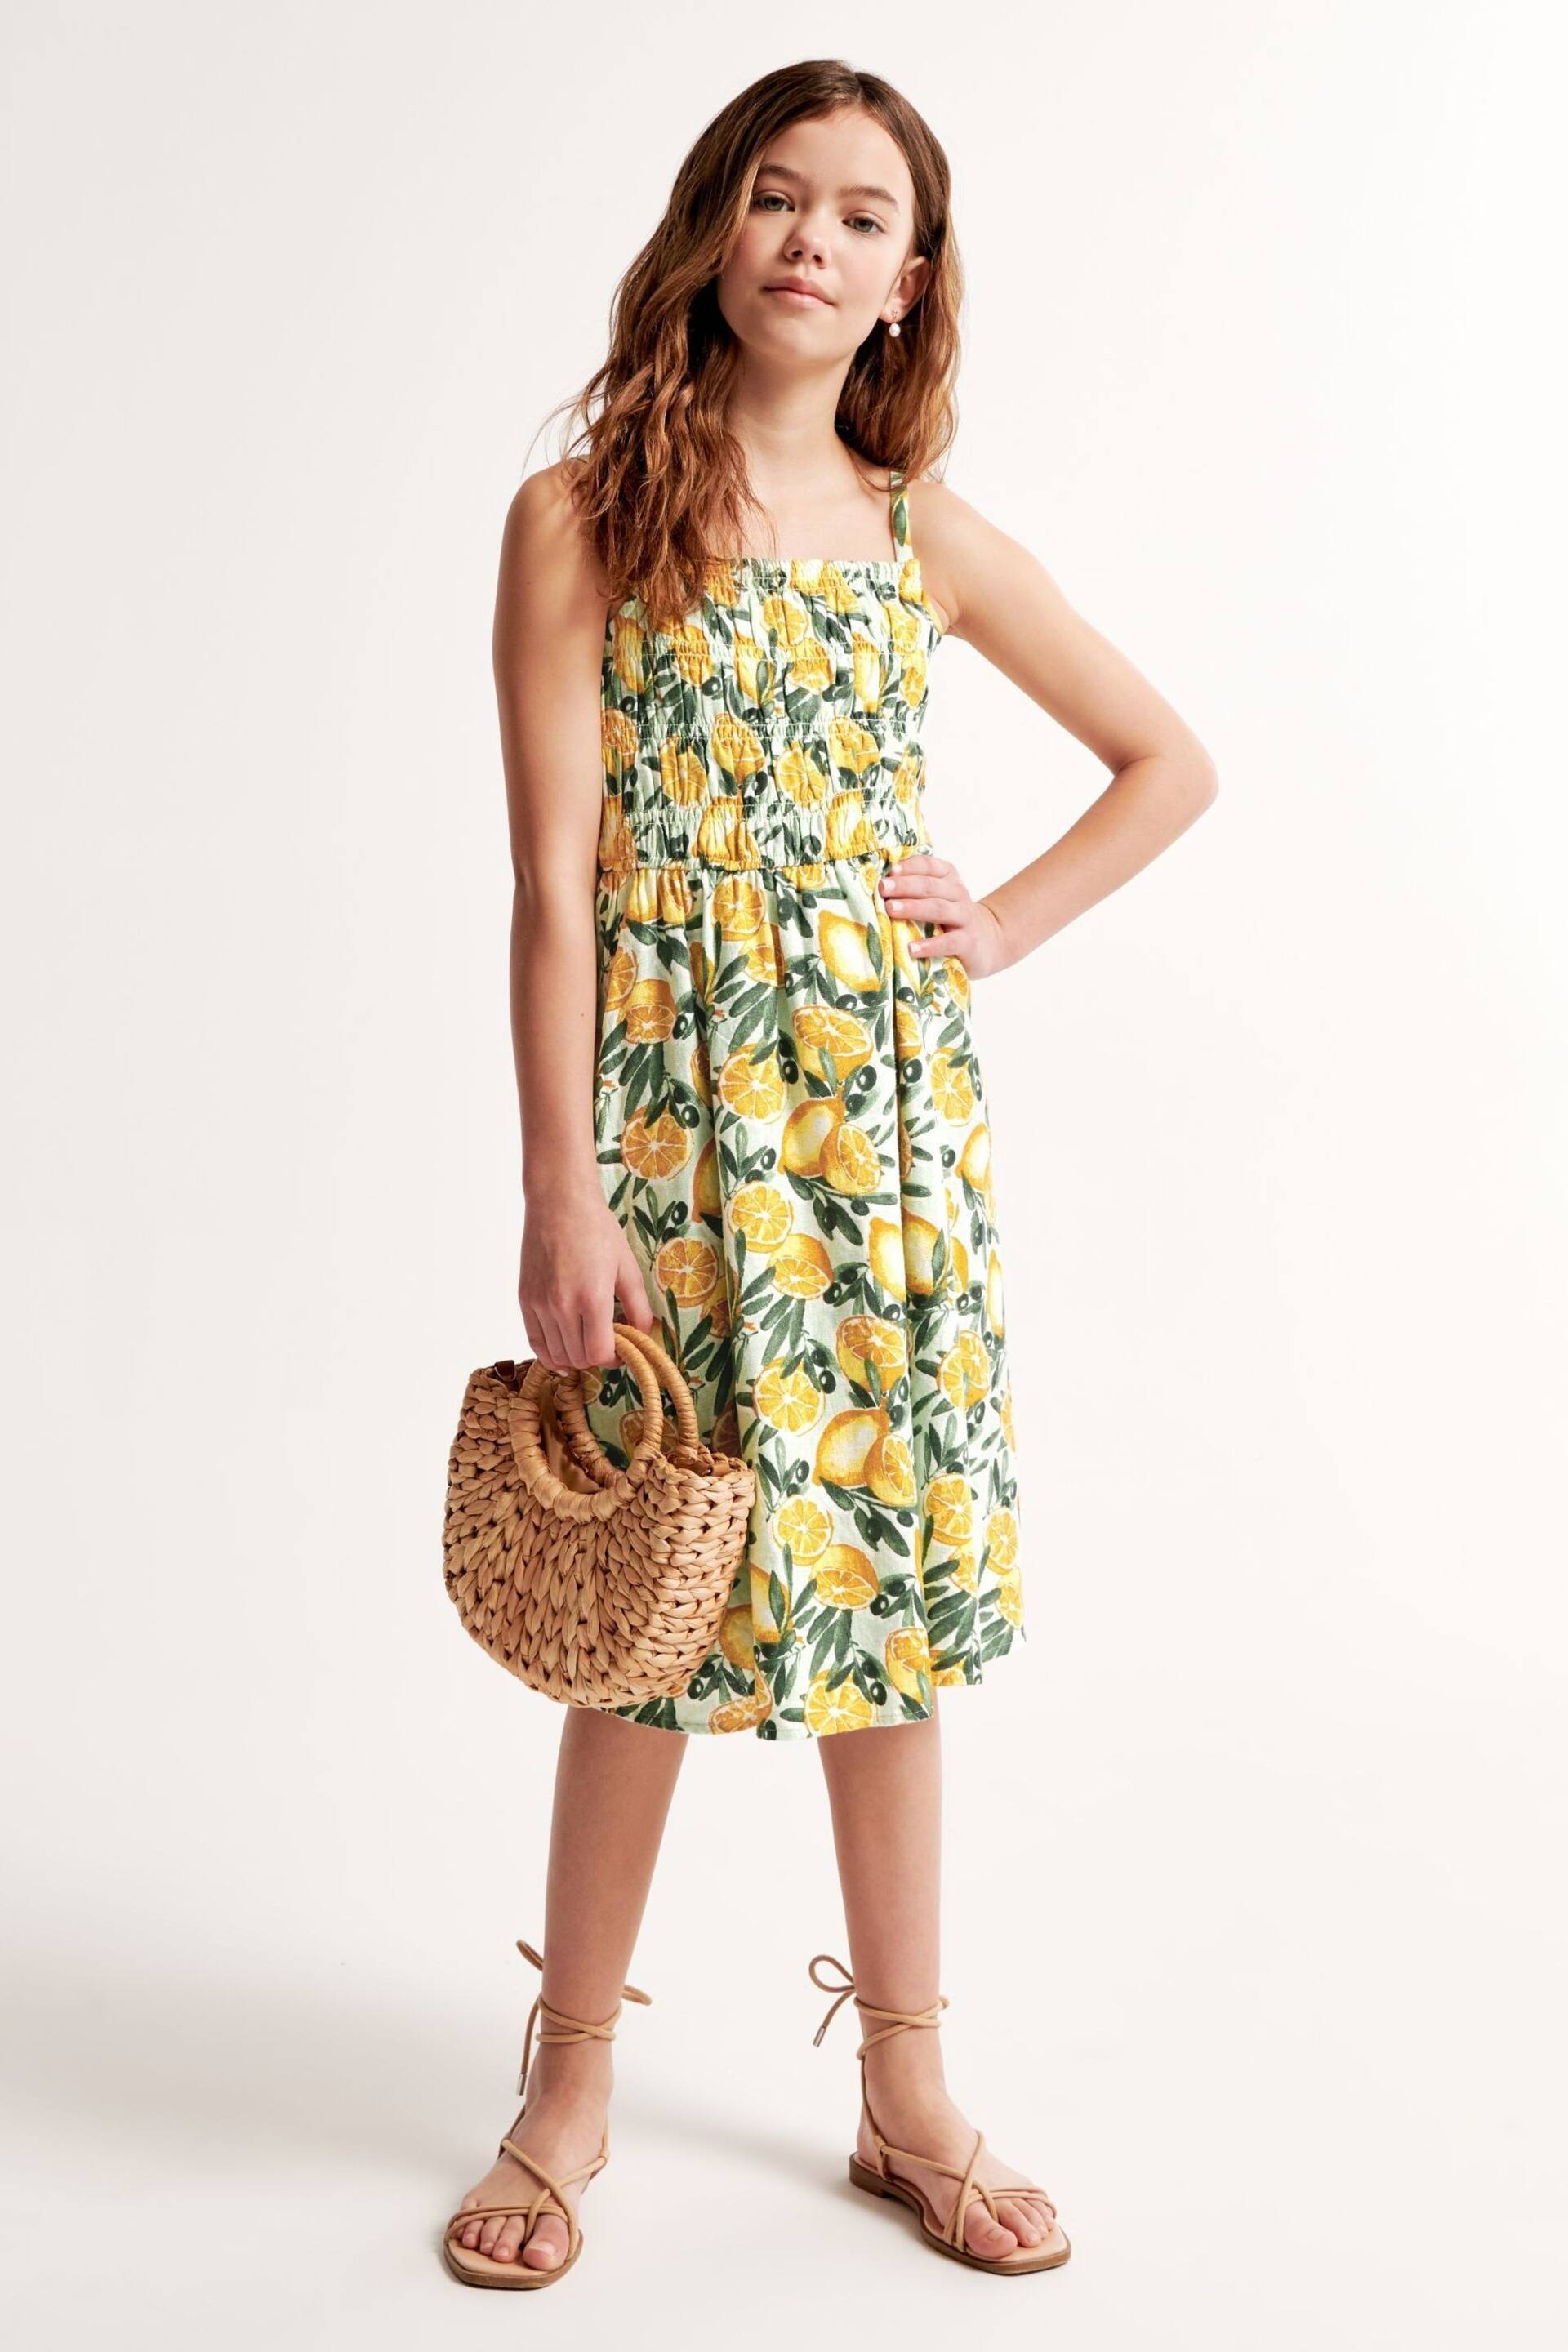 Abercrombie & Fitch Yellow Lemon Print Maxi Dress - Image 3 of 6